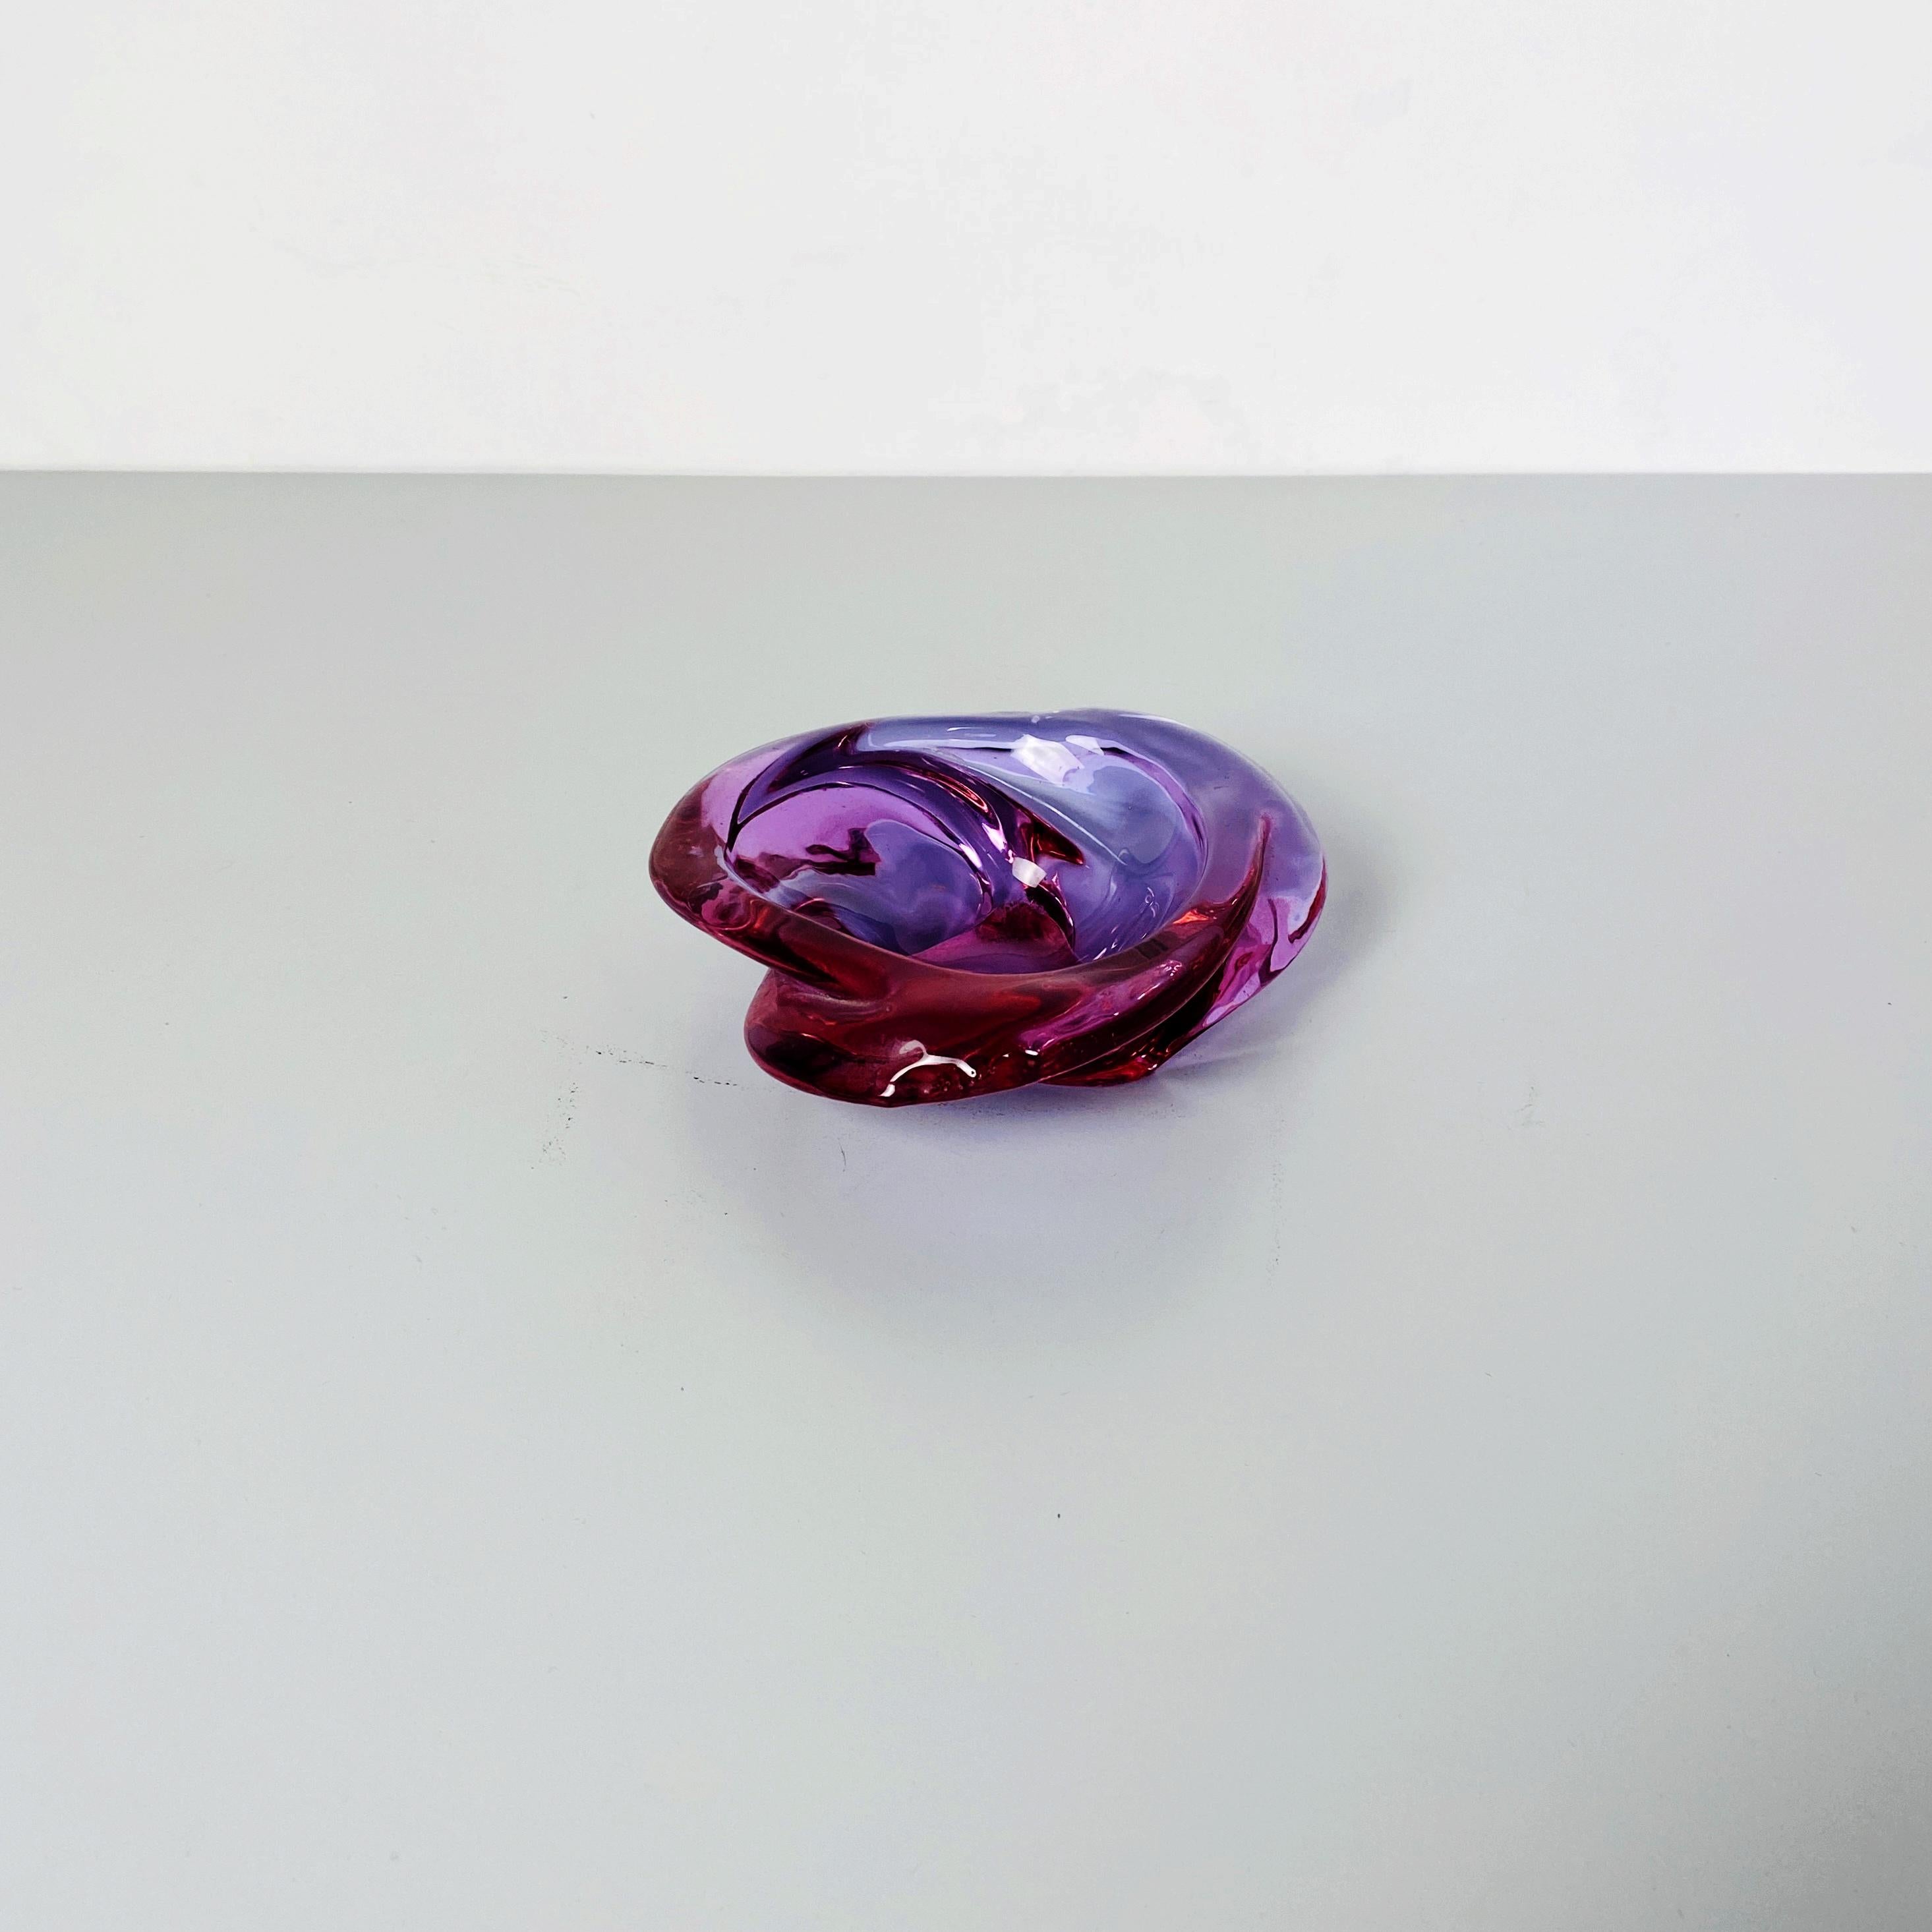 Italian Mid-Century Modern purple glass ashtray with irregular shape, 1970s
Purple glass ashtray with irregular shape resembling a flower.

Good condition, period patina.

Measures: 17x16x5h cm.
 